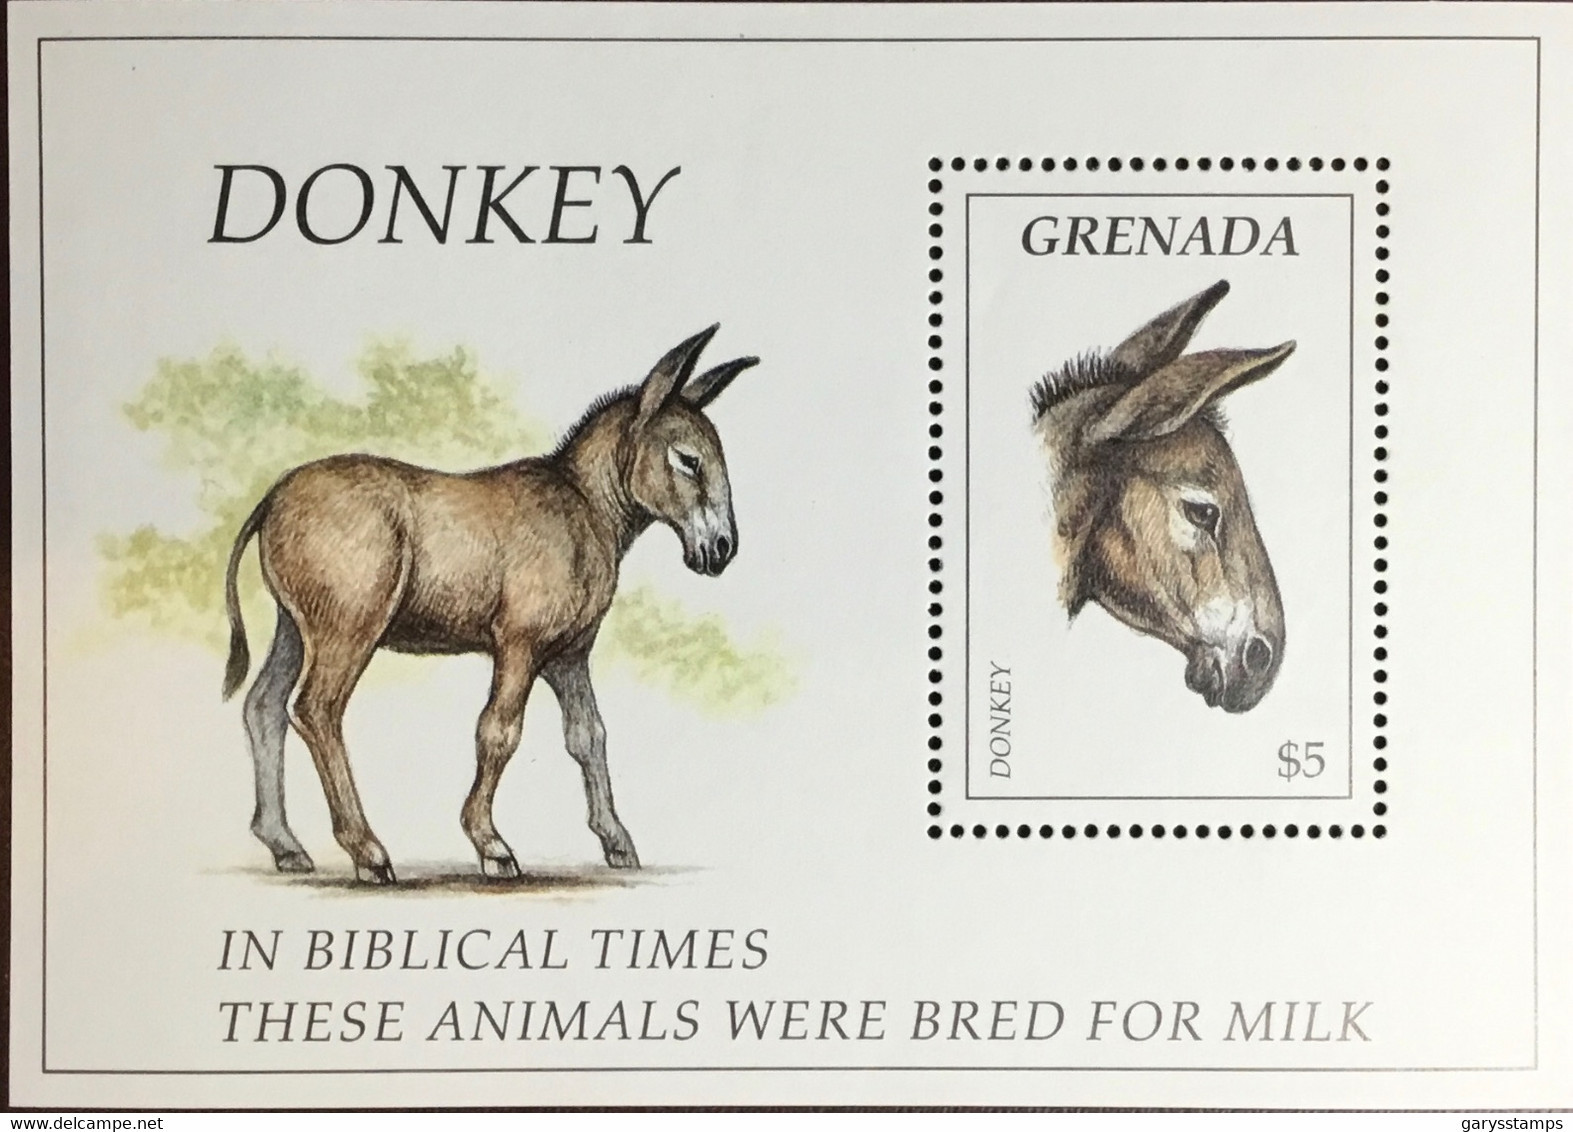 Grenada 1995 Pets Donkey Minisheet MNH - Donkeys